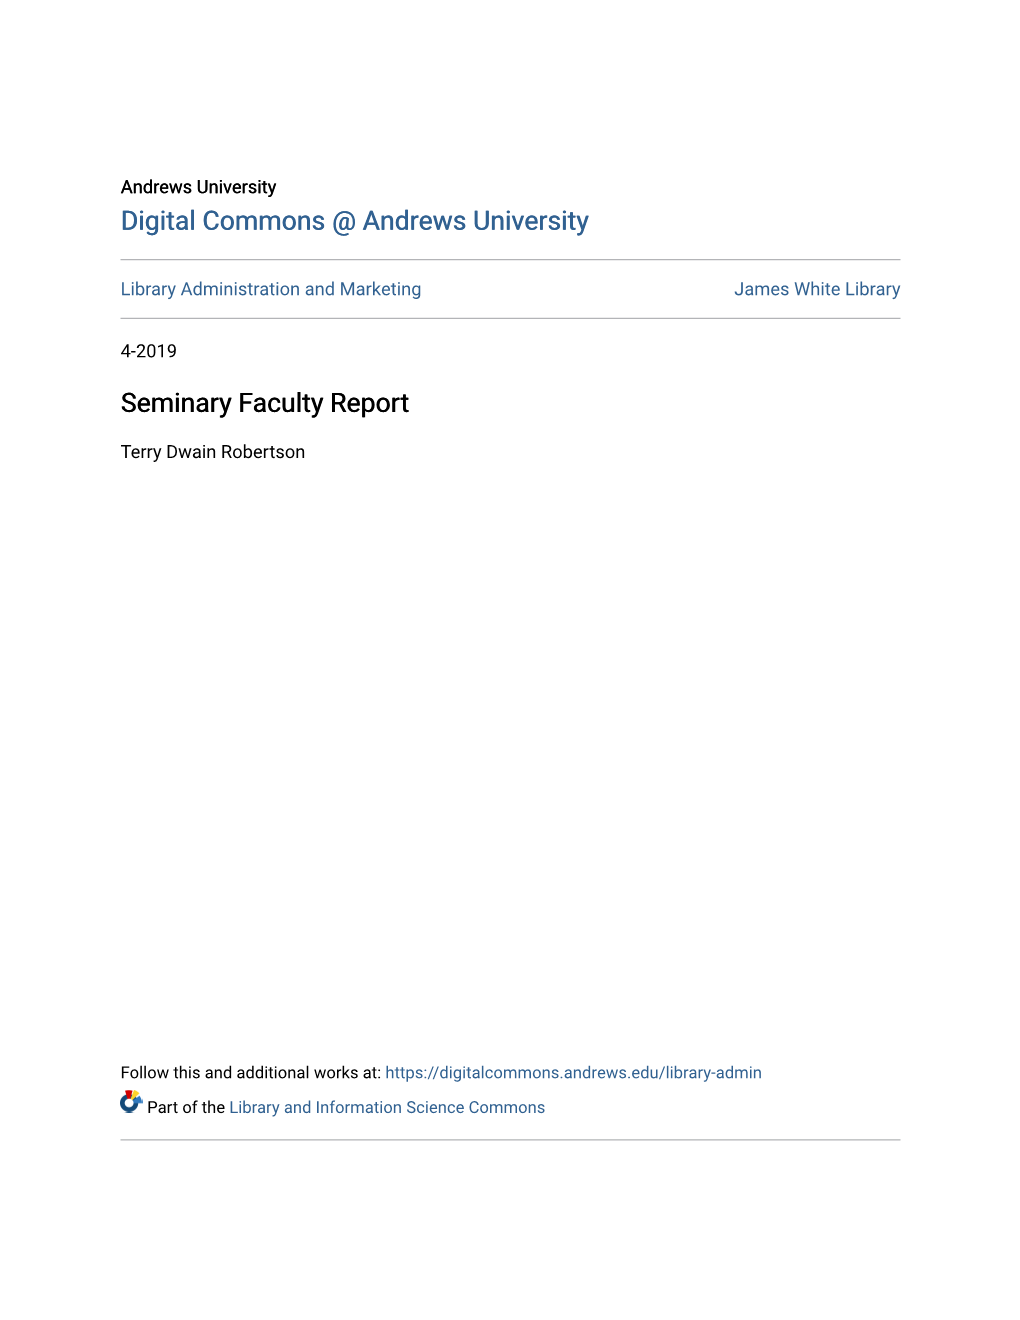 Seminary Faculty Report